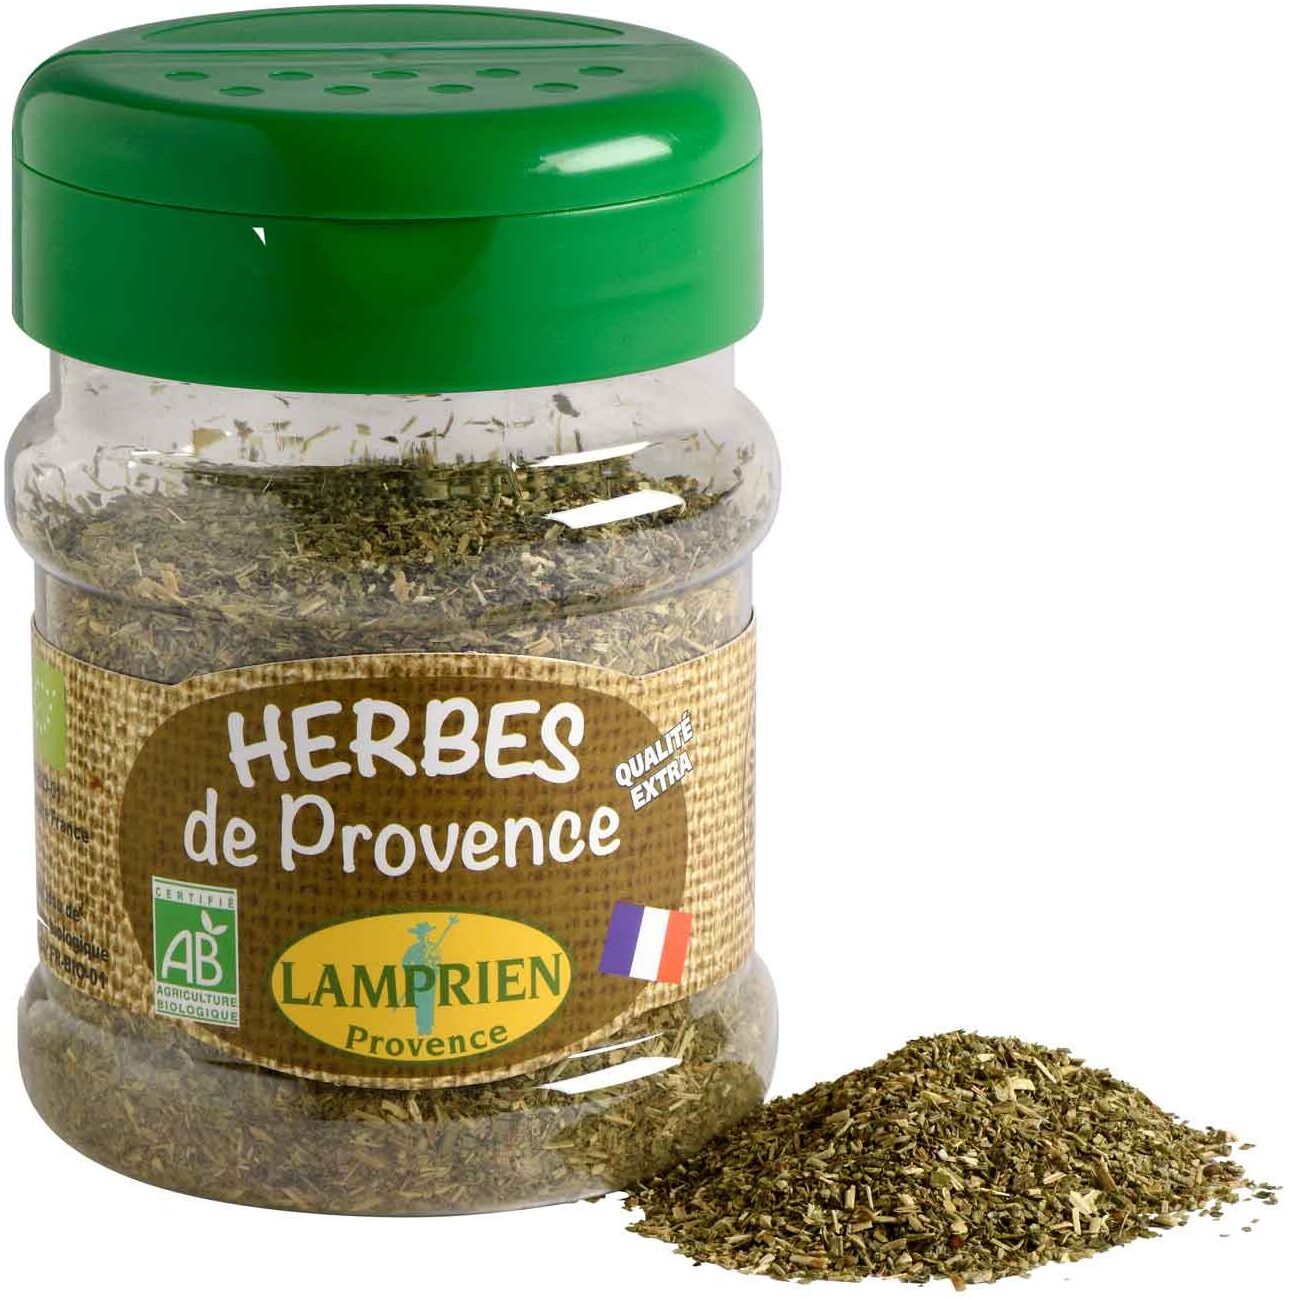 Herbes de Provence BIO - Product - fr